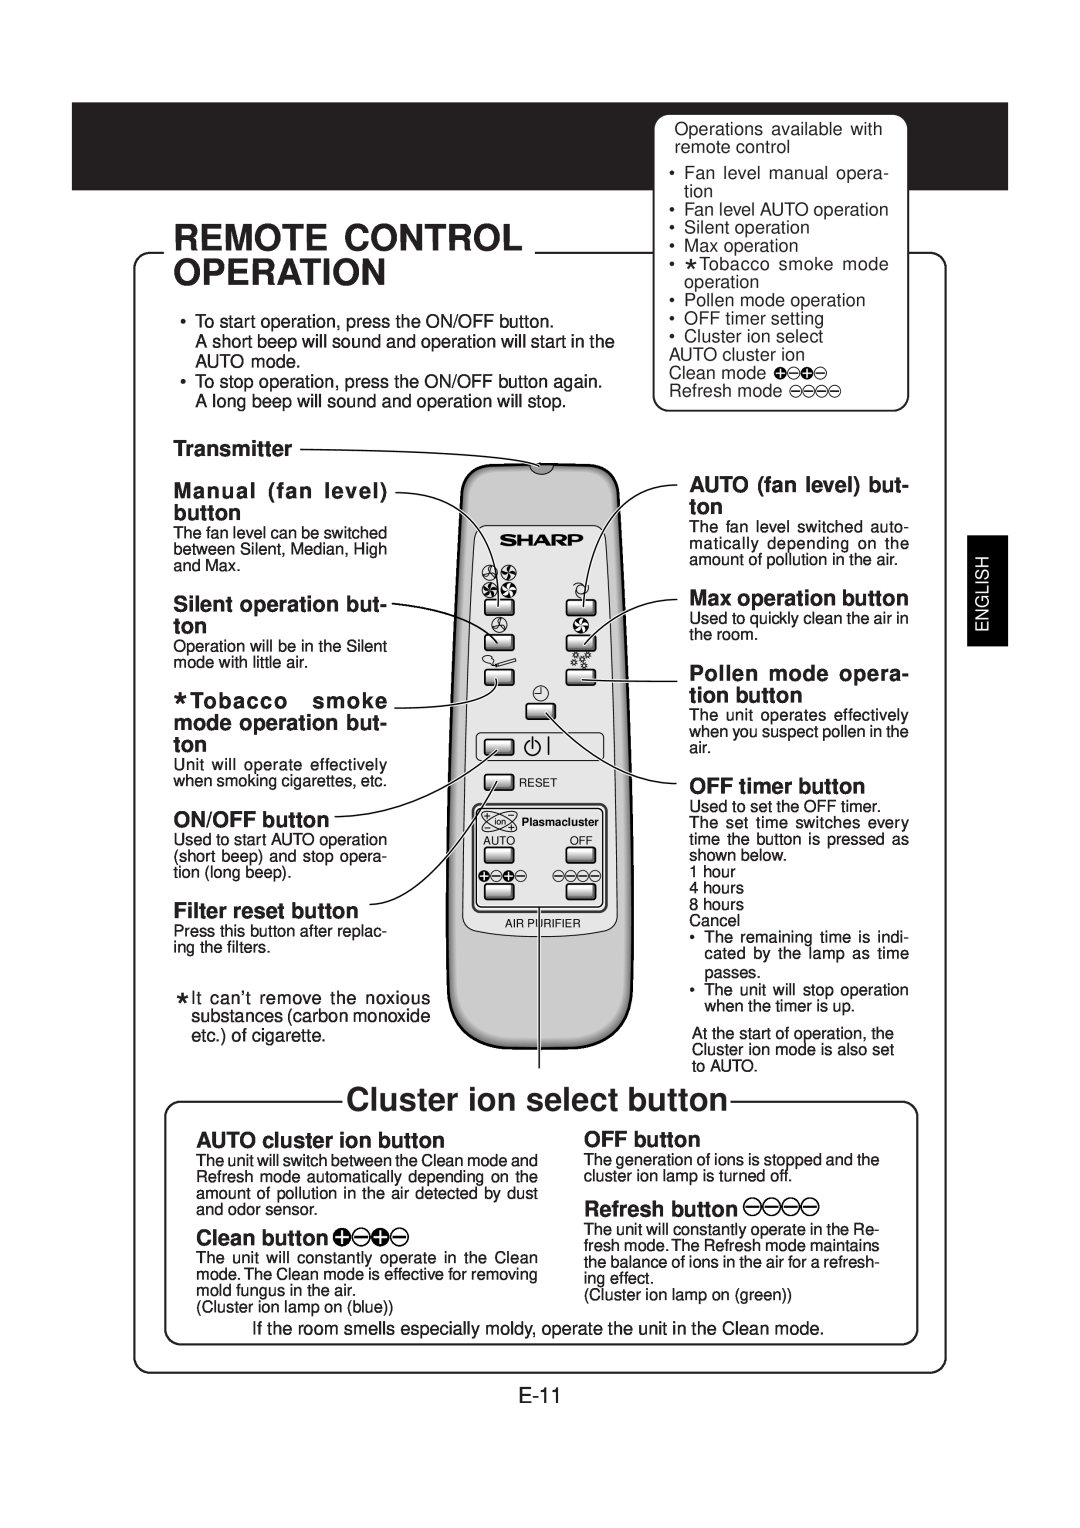 Sharp FU-40SE operation manual Remote Control, Operation, Cluster ion select button, E-11 